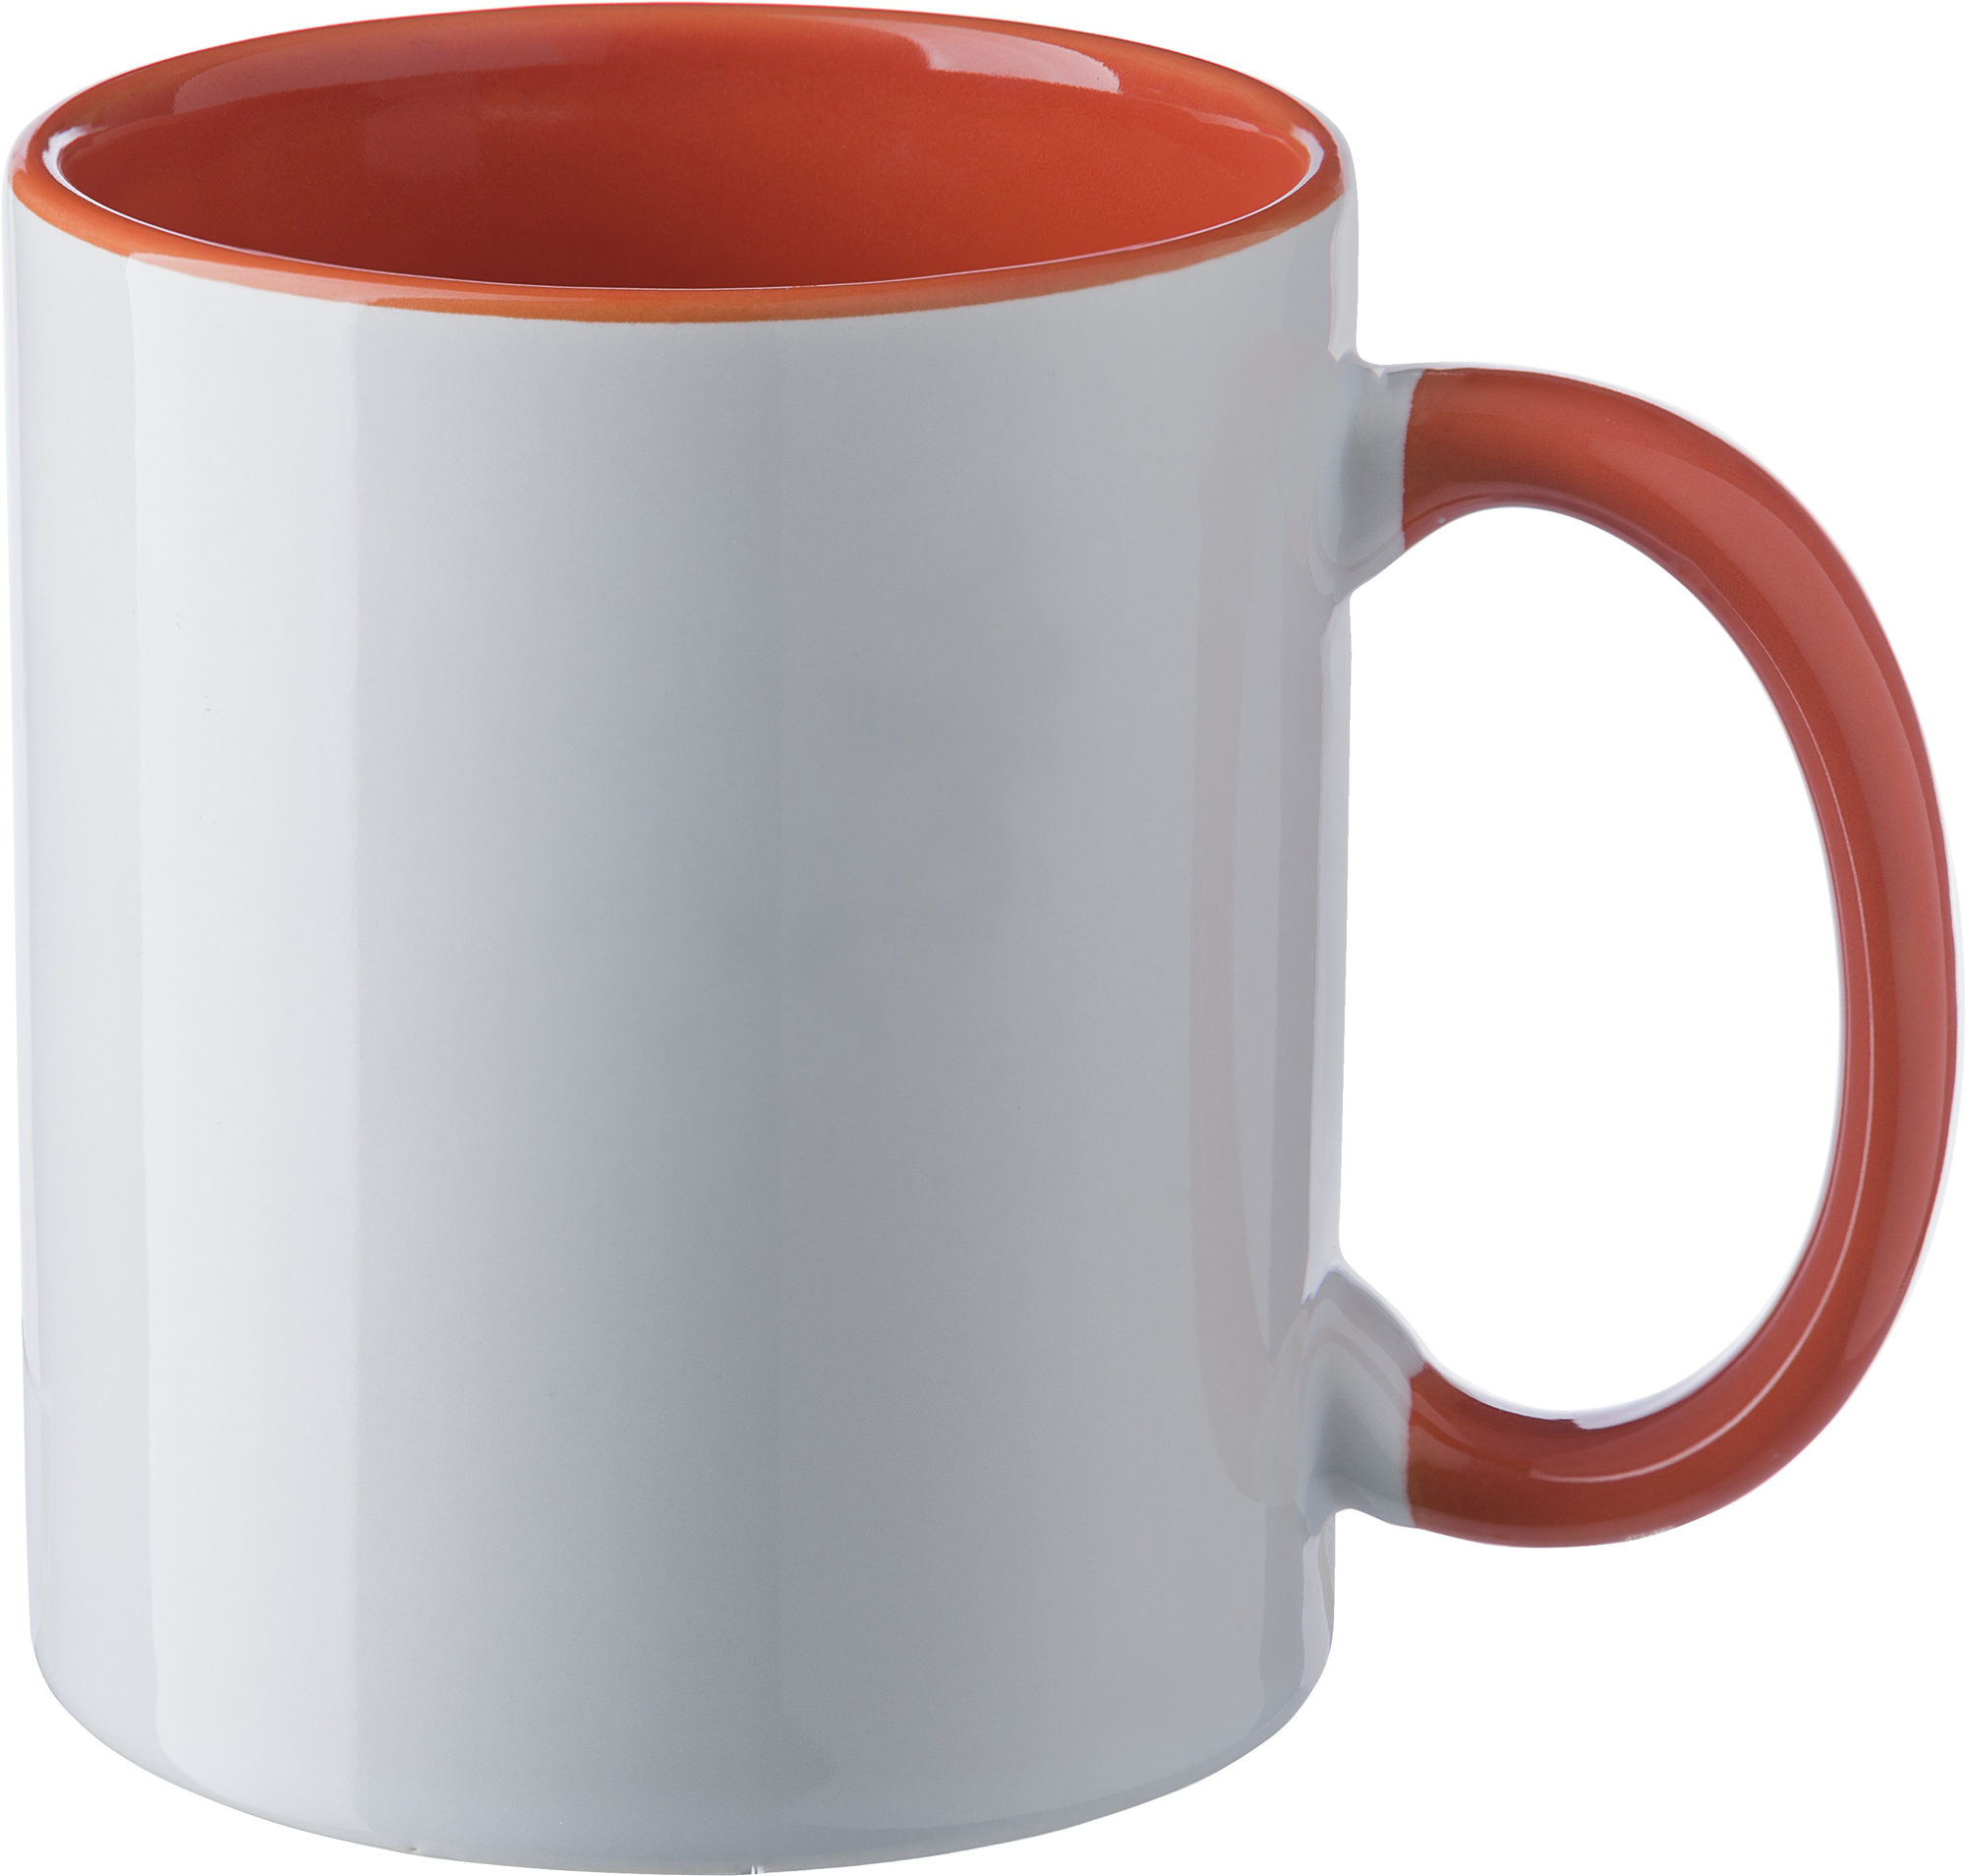 000000864564 007999999 3d045 rgt pro01 2022 fal - Coloured ceramic mug (300ml)